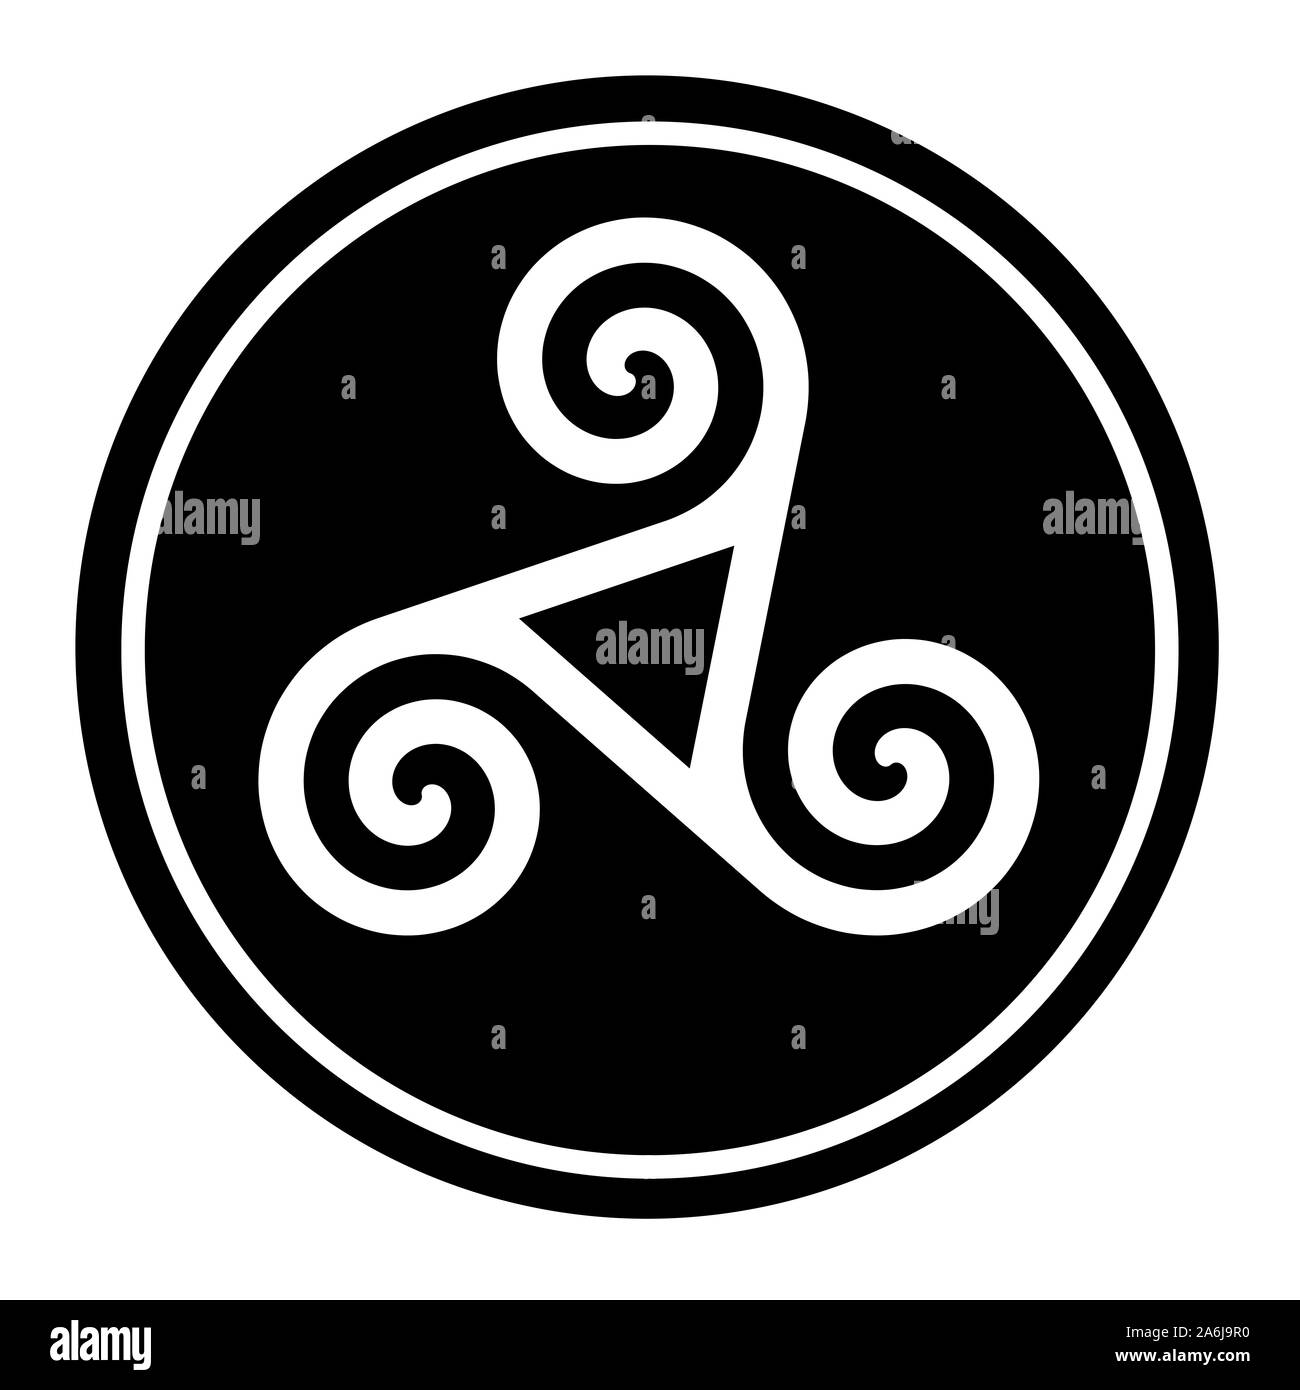 Triskelion symbol icon in a black circle Stock Photo